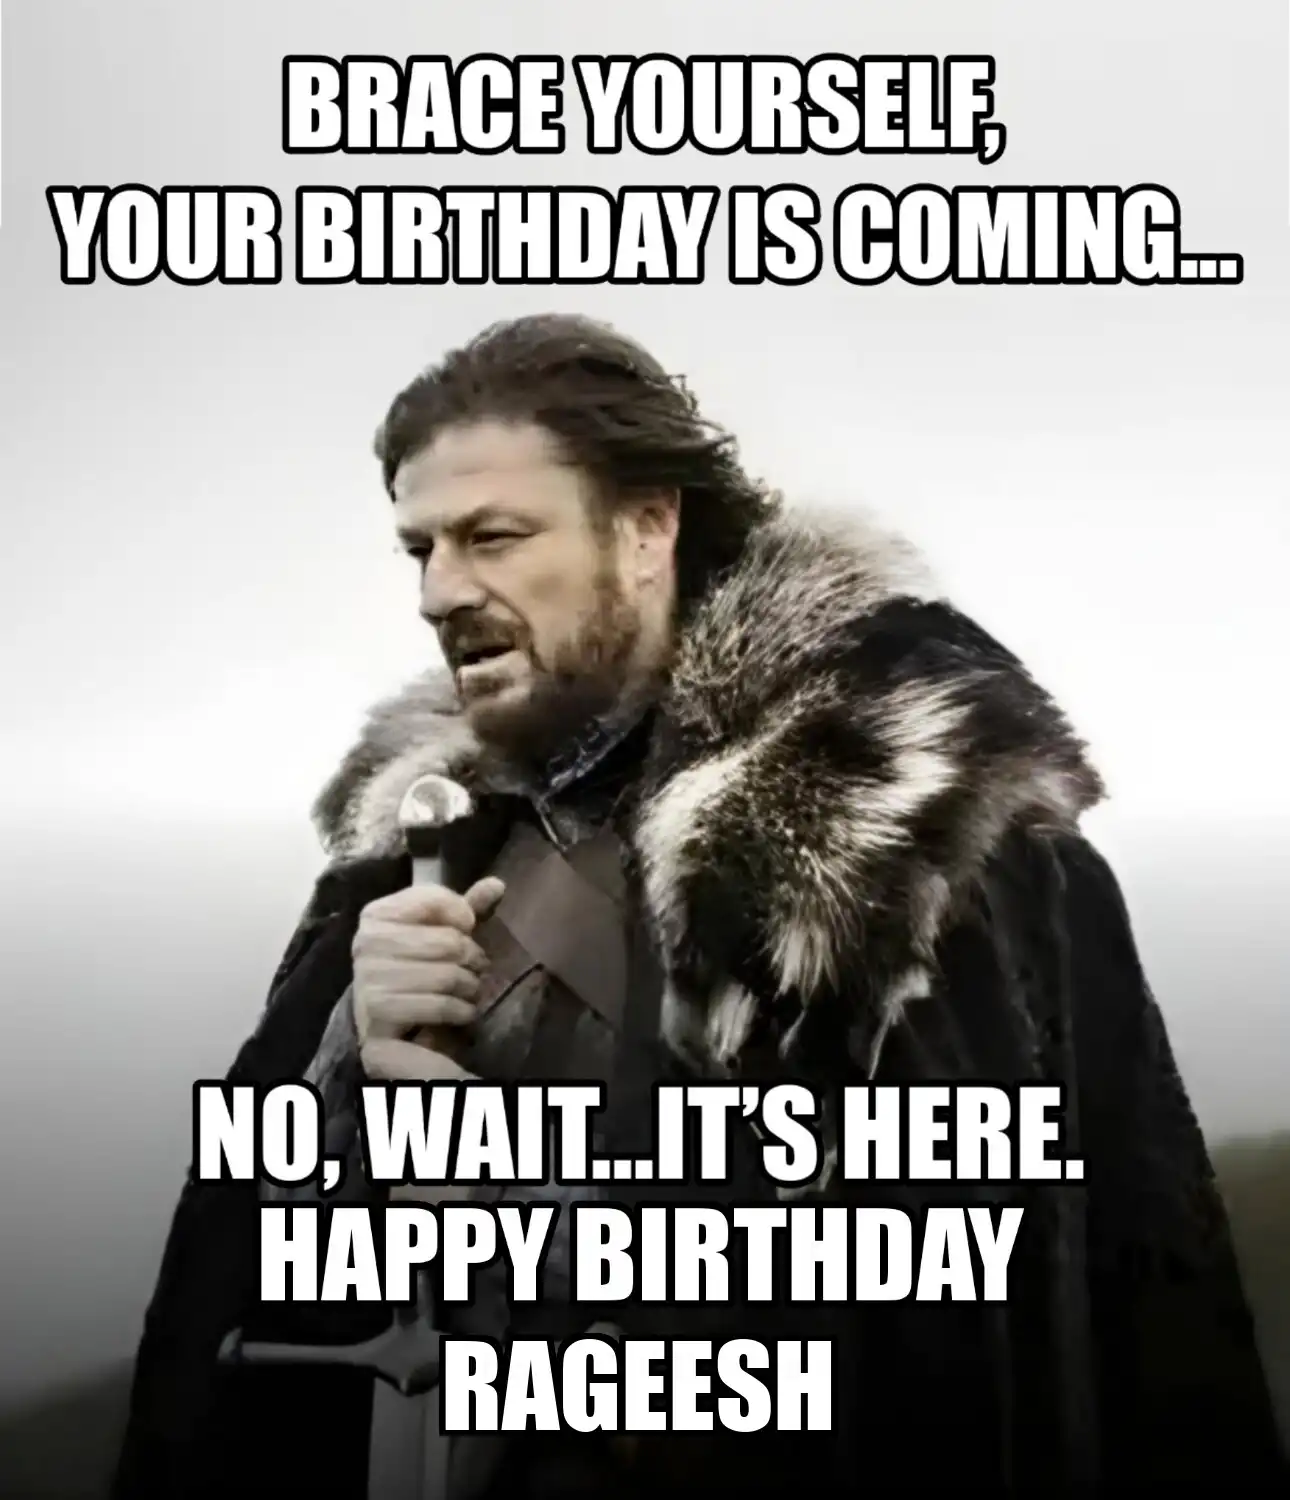 Happy Birthday Rageesh Brace Yourself Your Birthday Is Coming Meme